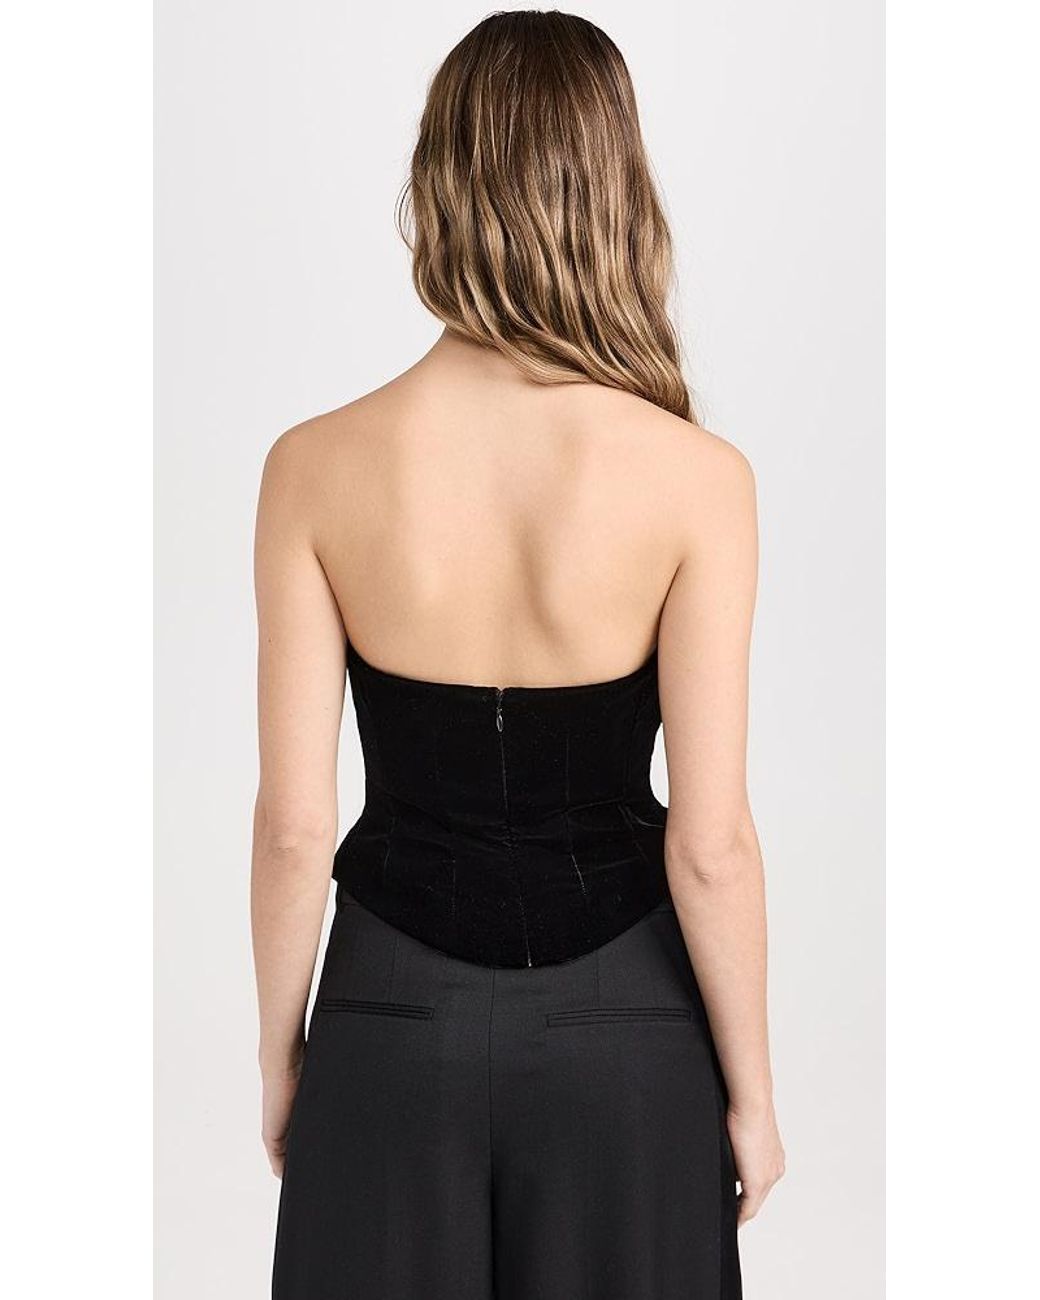 Giubba strapless velvet corset top in black - Max Mara